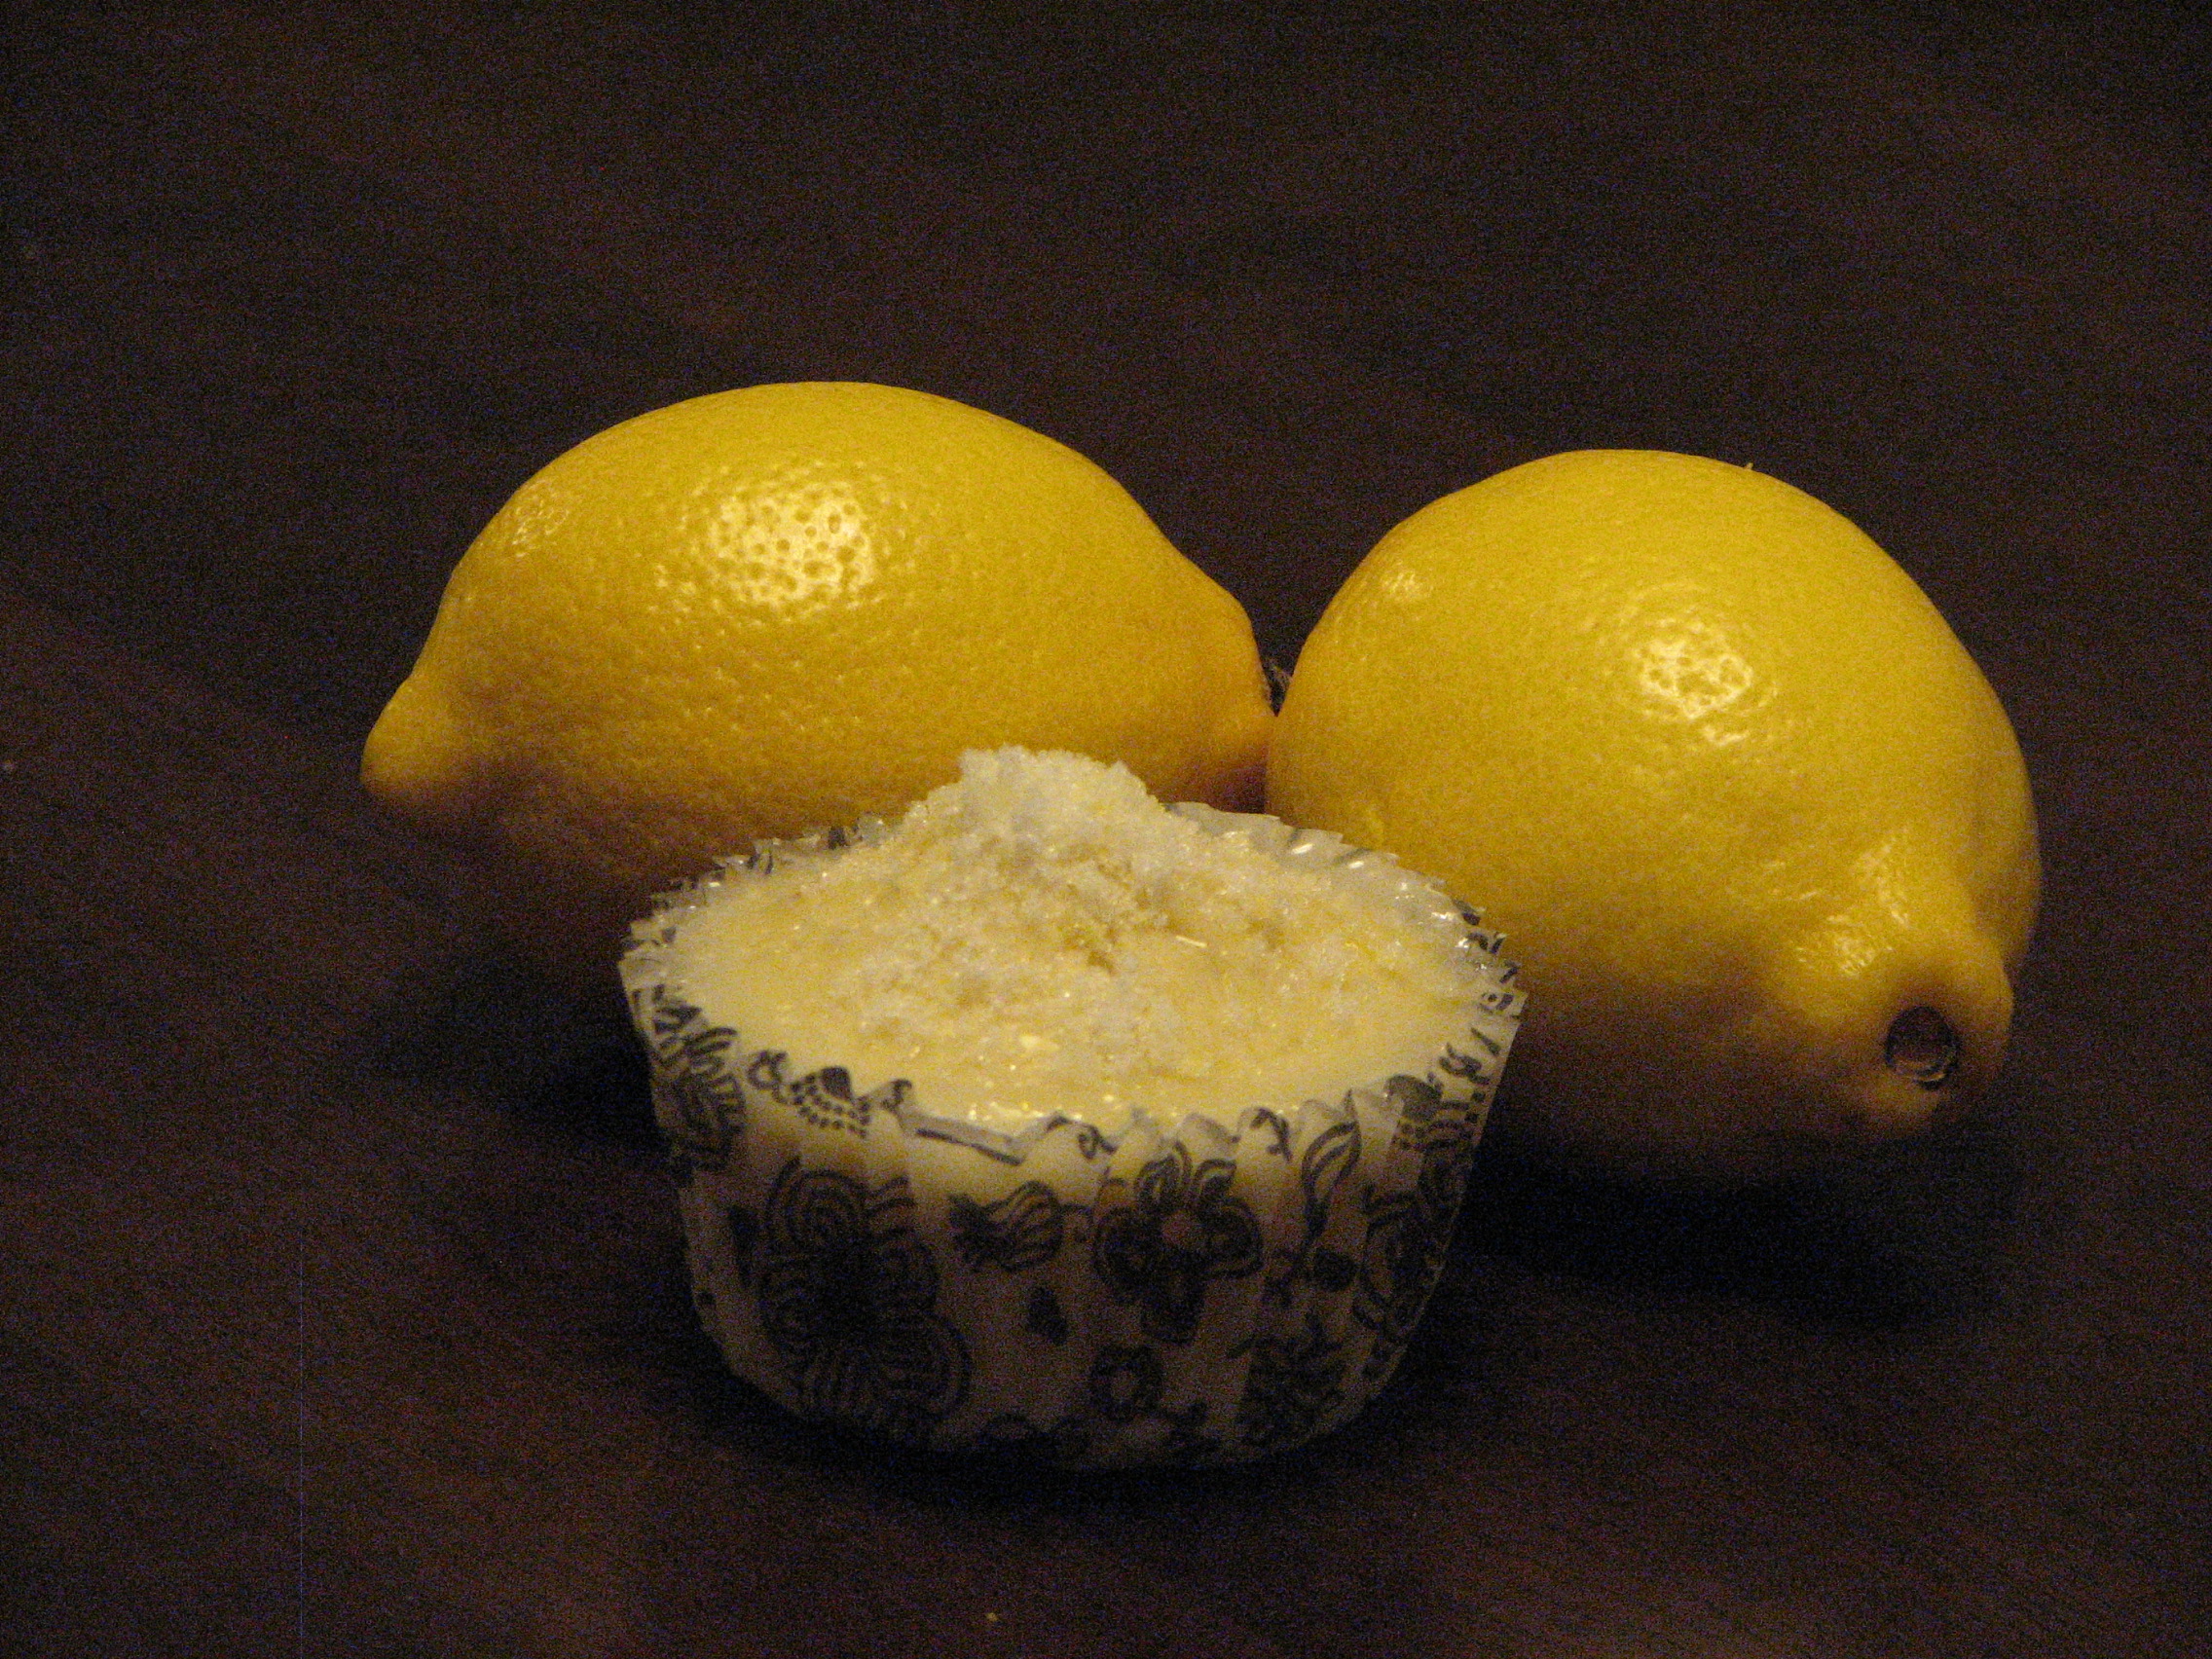 lucious lemon cupcakes